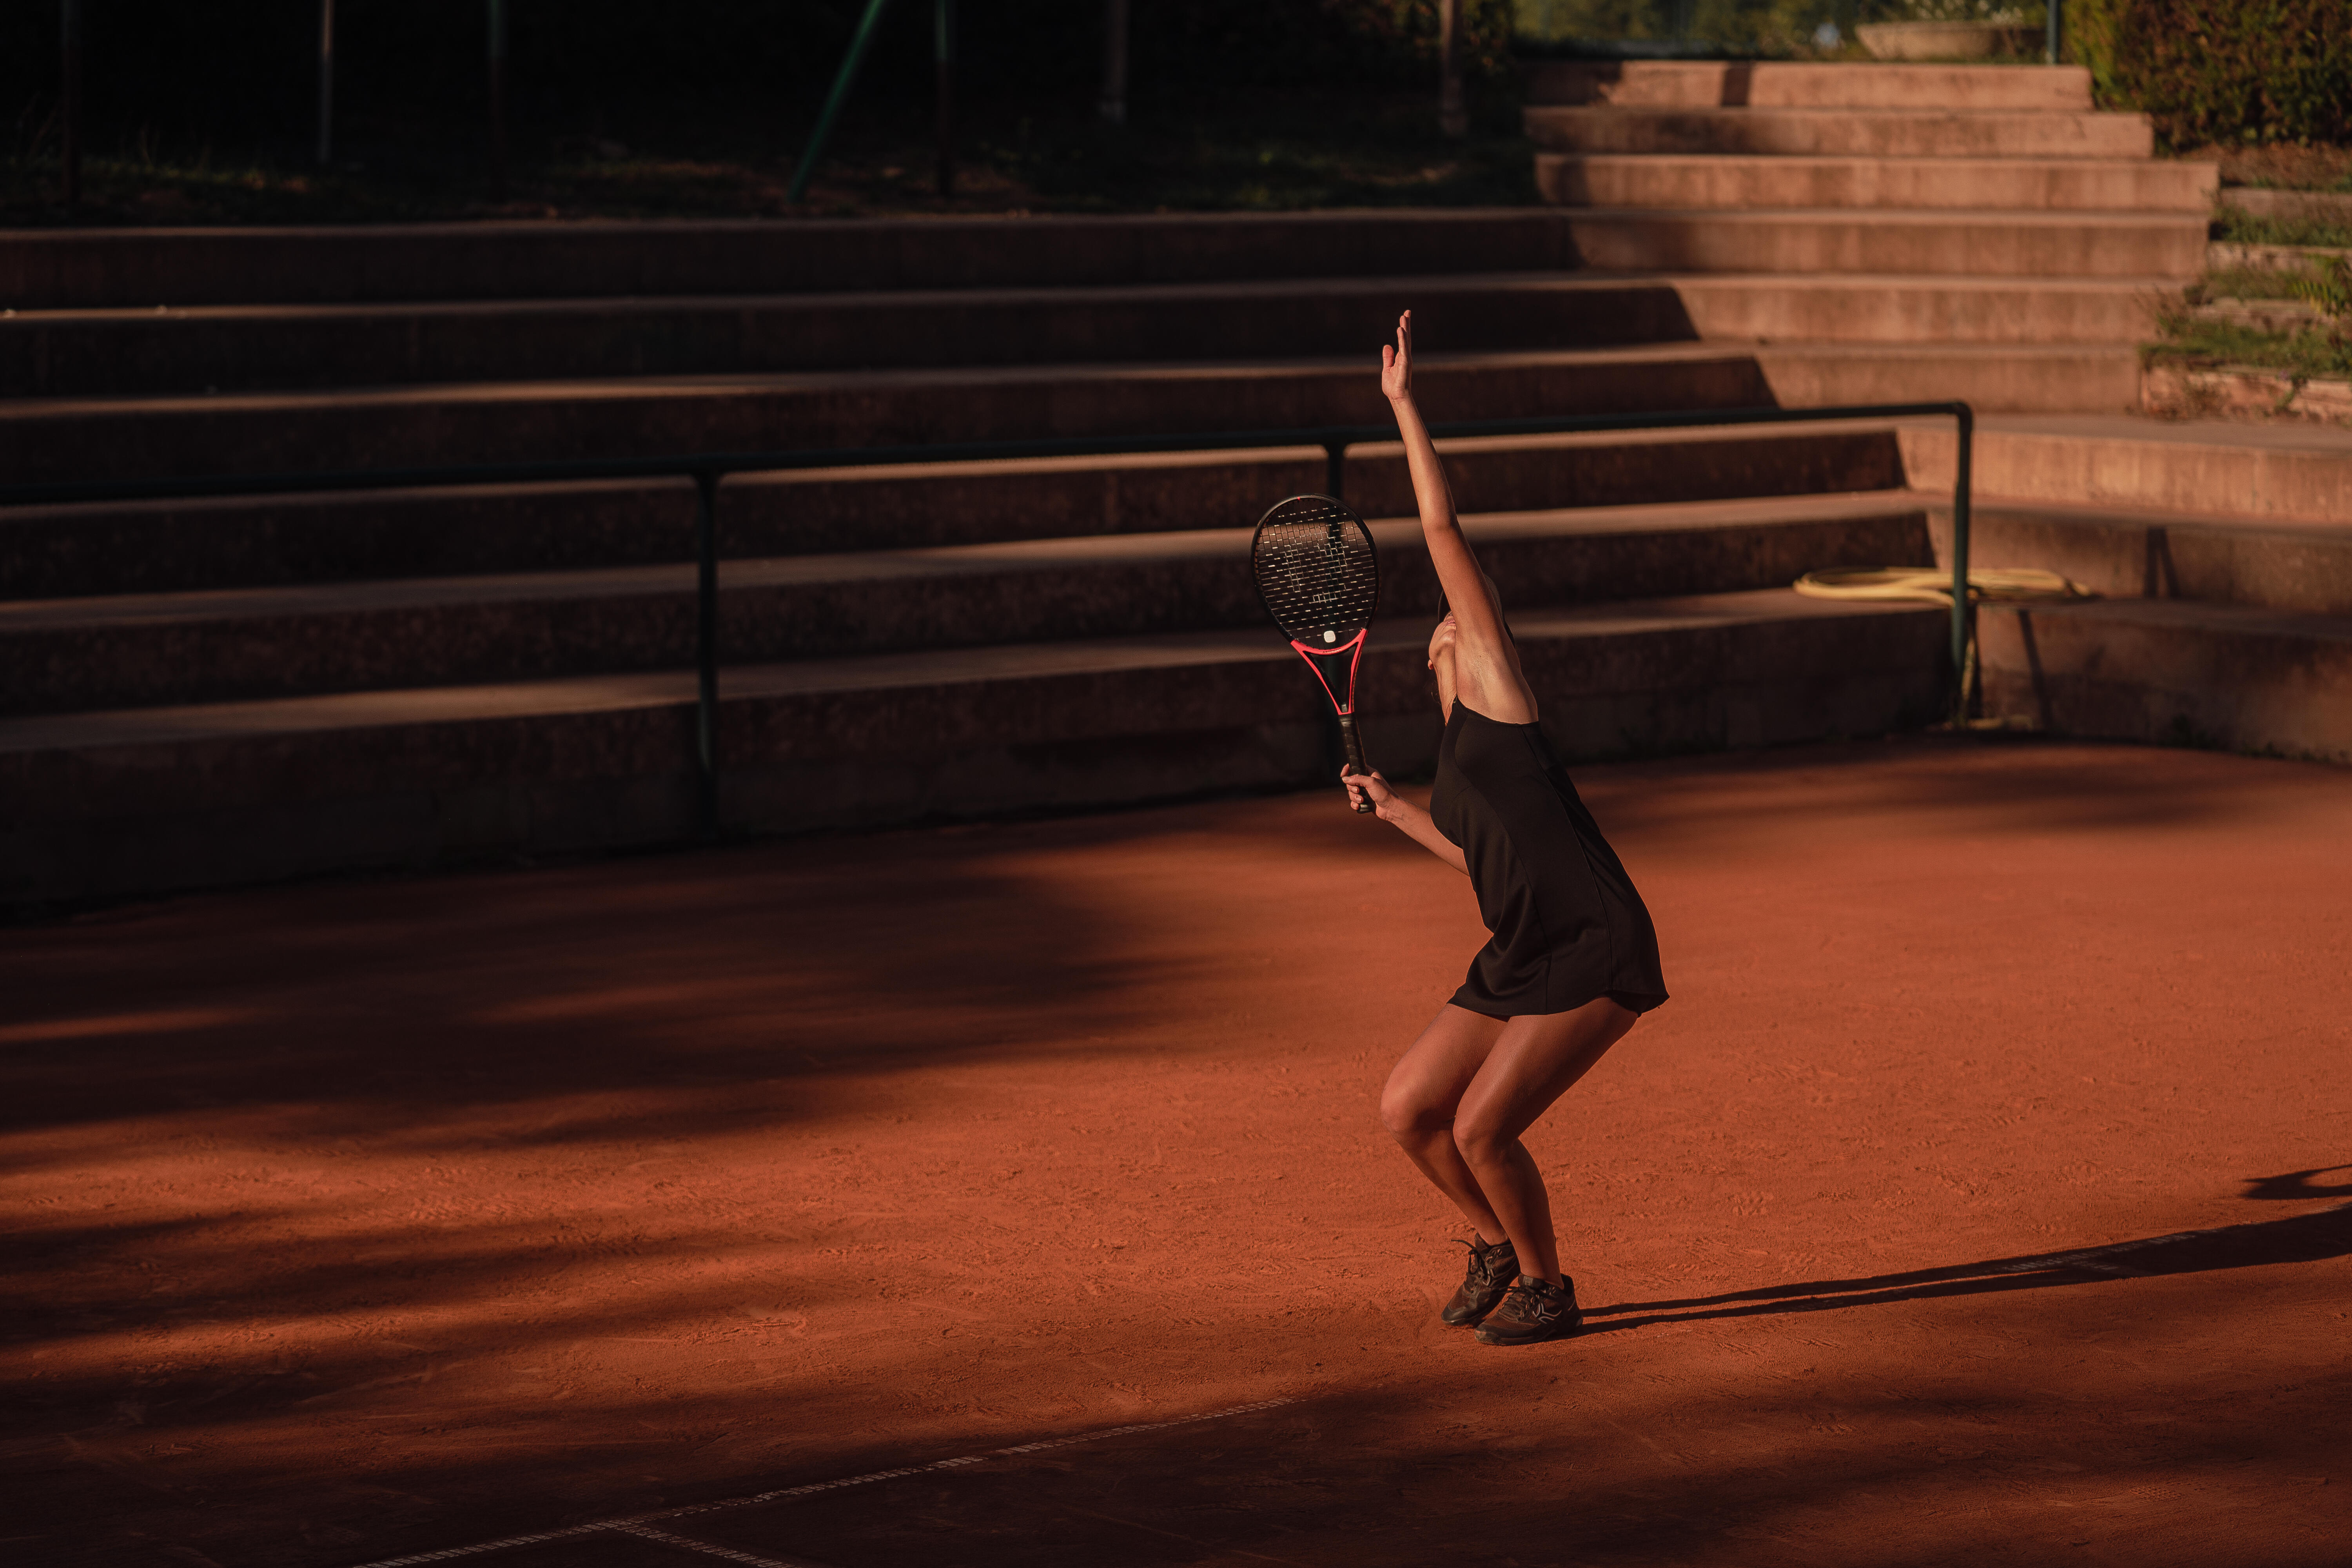 Women's Tennis Dress - 500 Black - ARTENGO